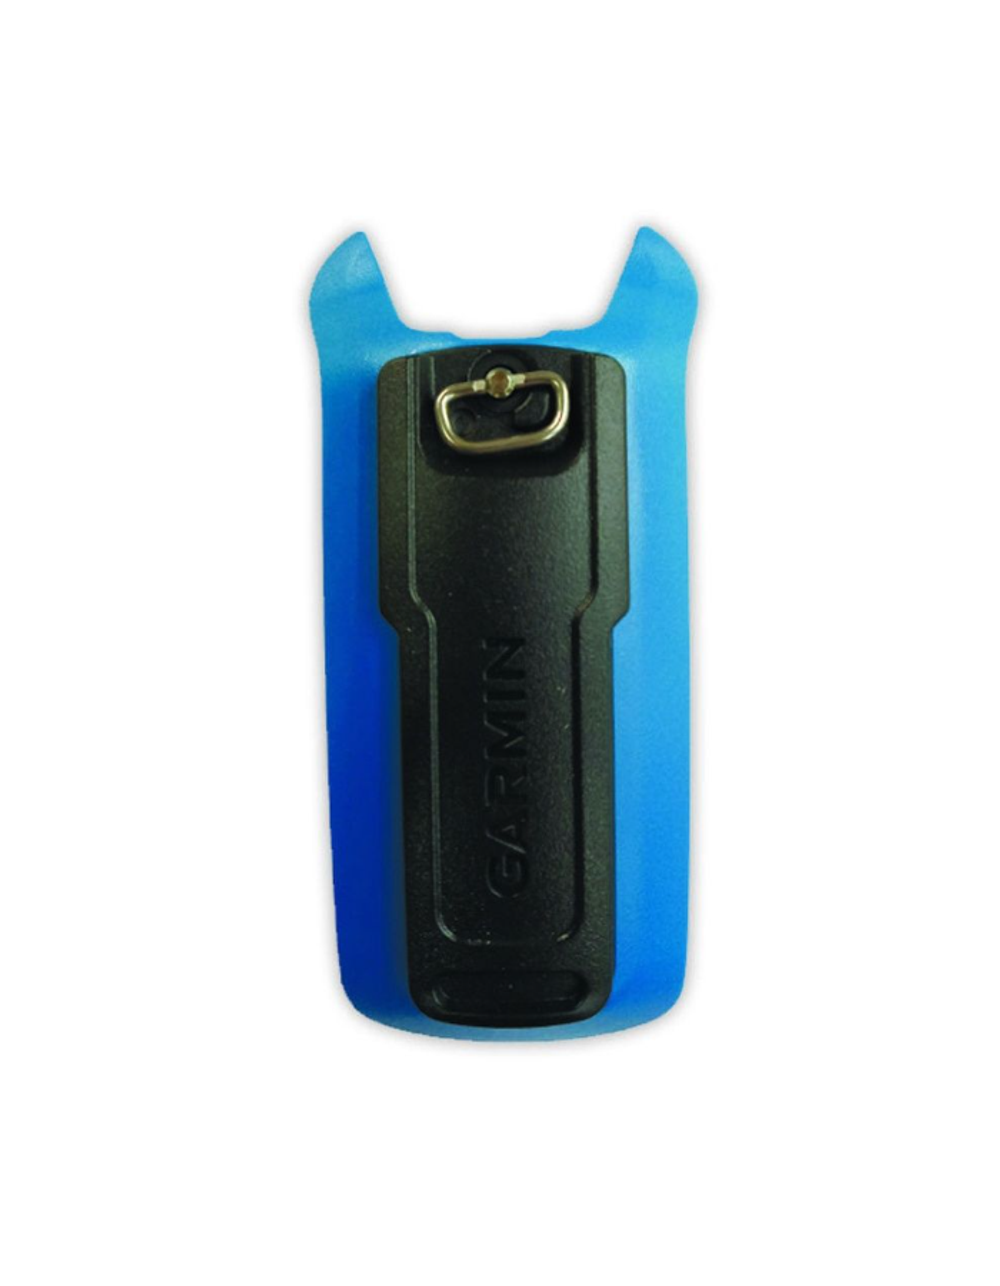 Garmin eTrex Touch 25 крышка батарейного отсека, синяя (010-01325-BC)